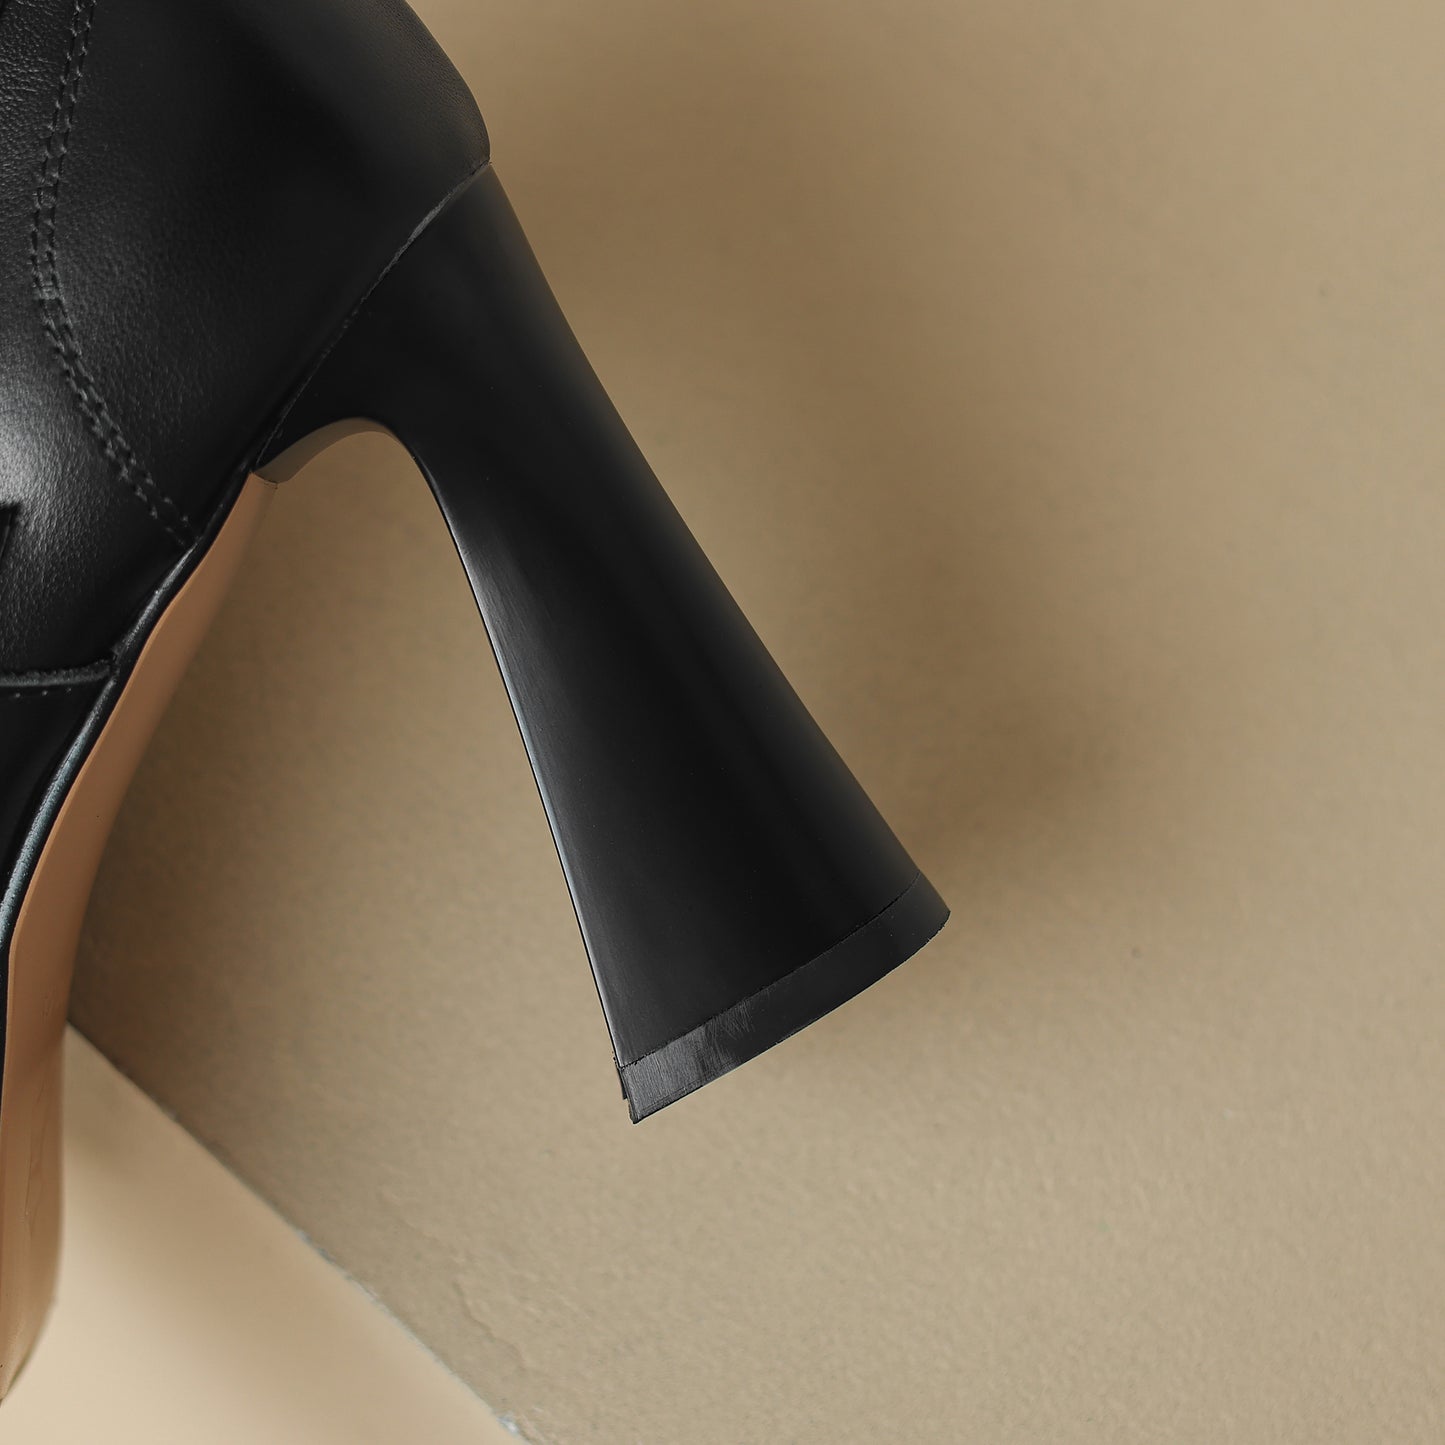 TinaCus Handmade Women's Genuine Leather Platform High Heel Pointed Toe Buckle Pumps Shoes